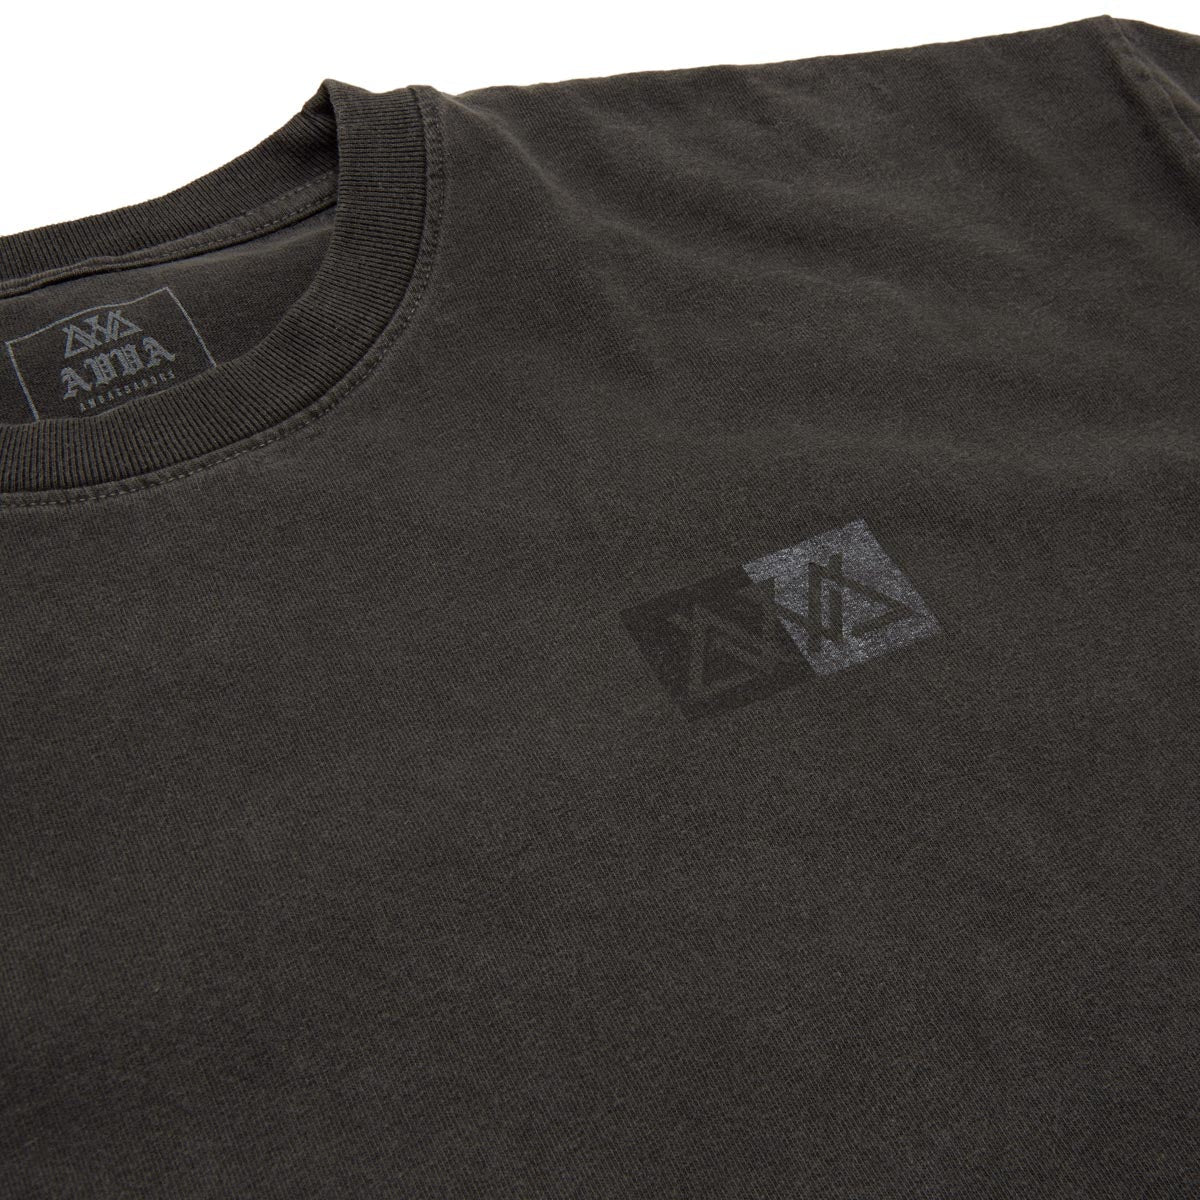 AVVA Pro Box Logo T-Shirt - Charcoal Grey image 3